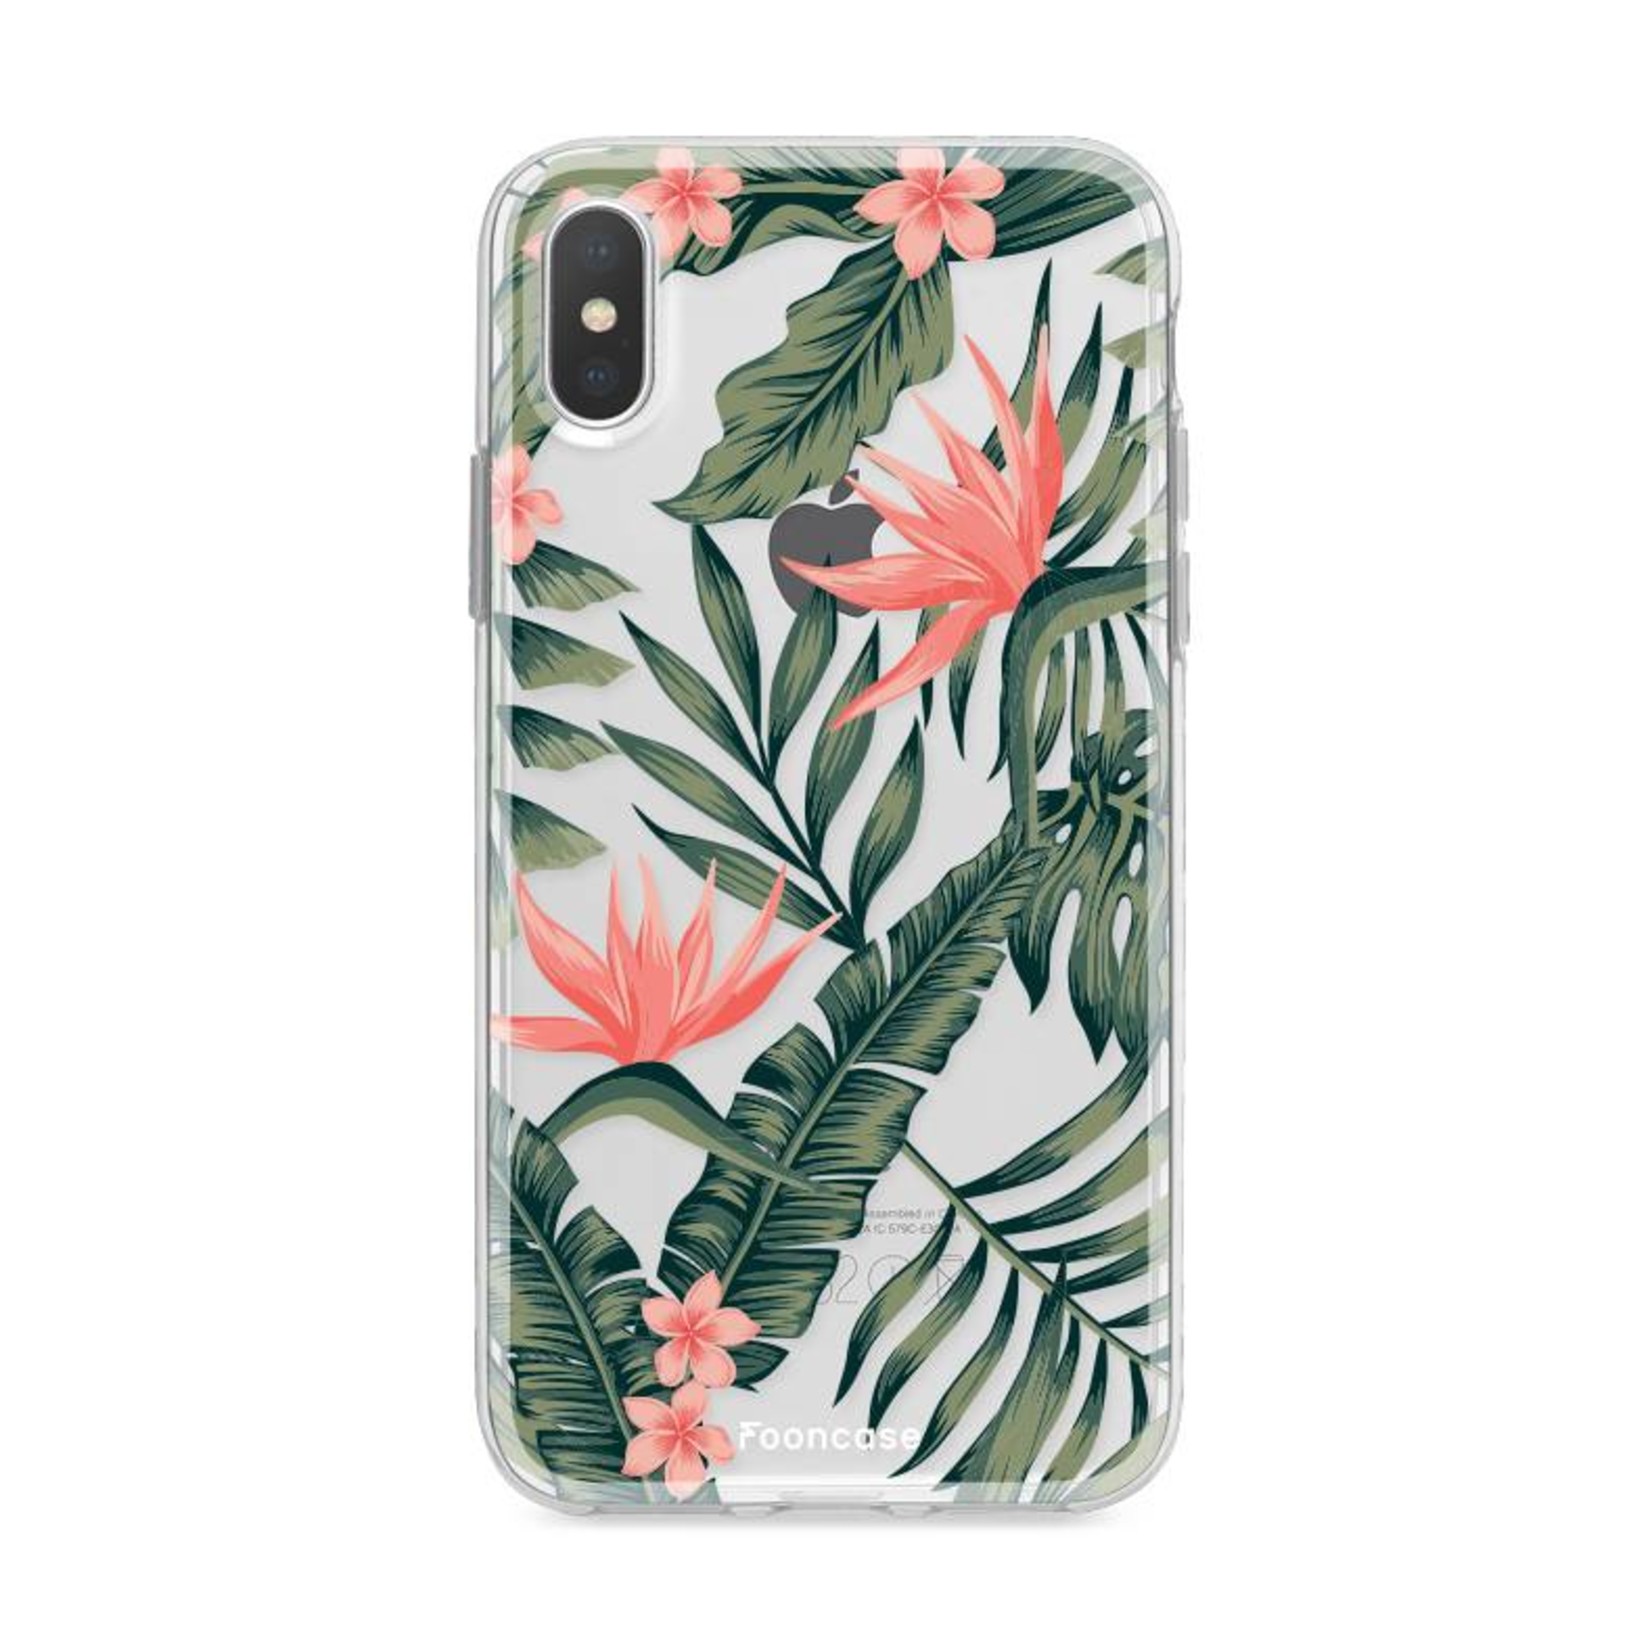 FOONCASE Iphone XS Handyhülle - Tropical Desire